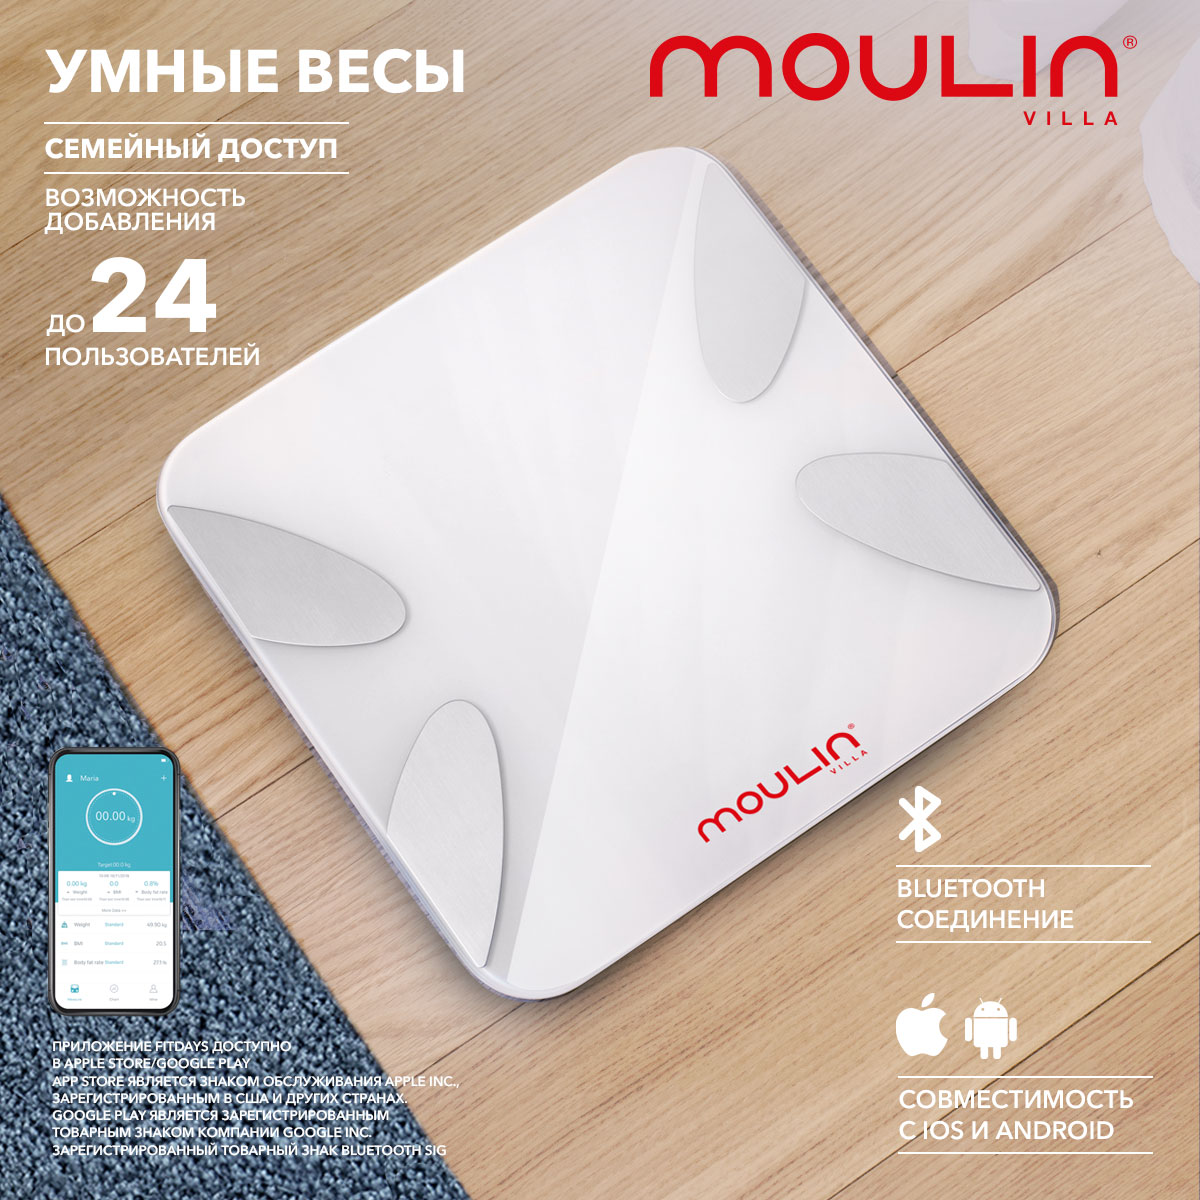 Весы напольные электронные Moulin Villa MV-SC 003 mini White весы напольные econ eco bs018 белые